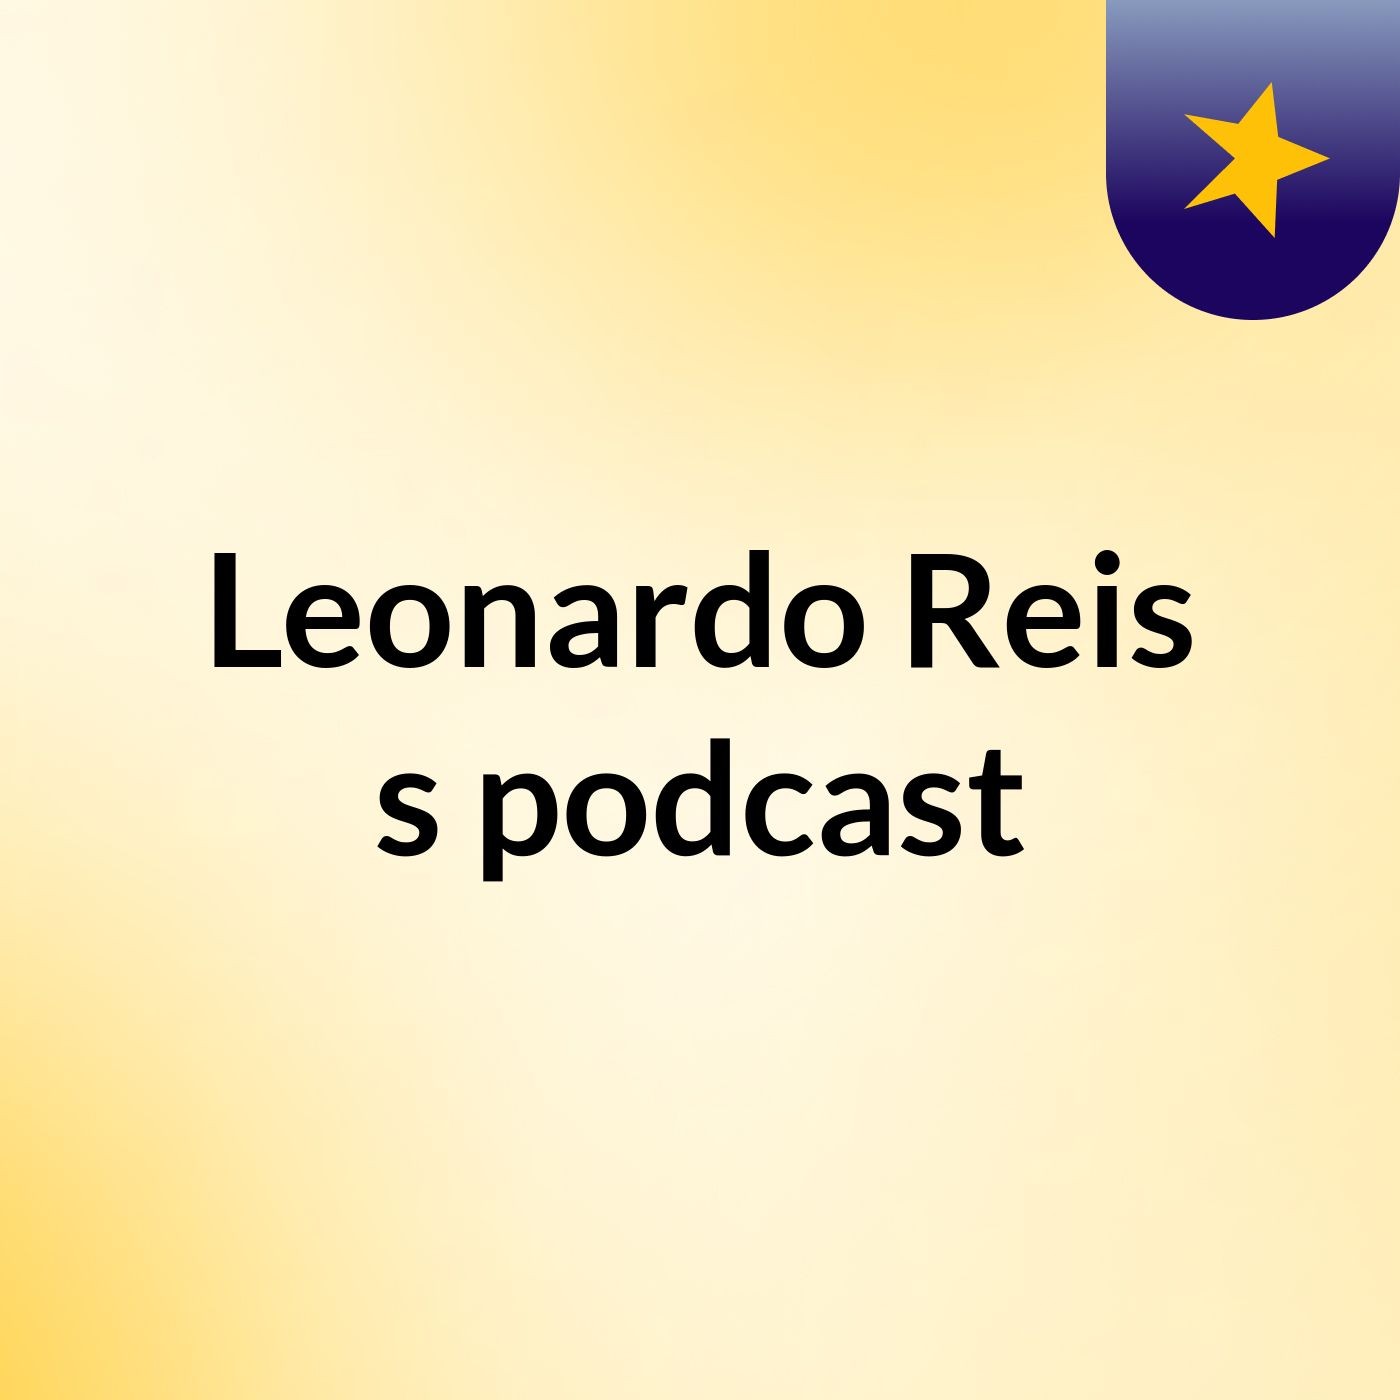 Leonardo Reis's podcast